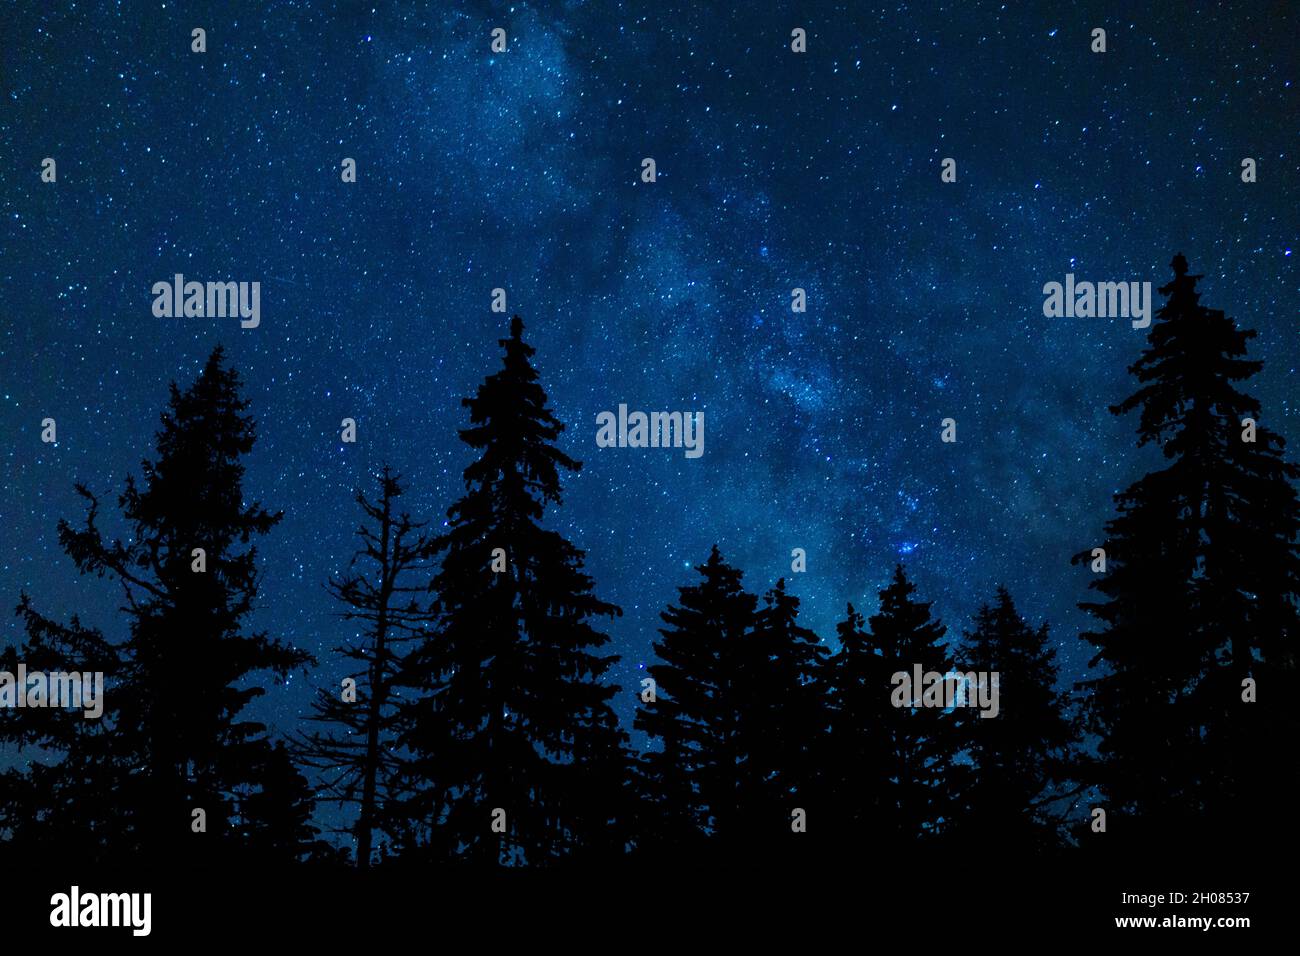 Night Sky Full Of Stars Over Pine Tree Silhouettes Stock Photo